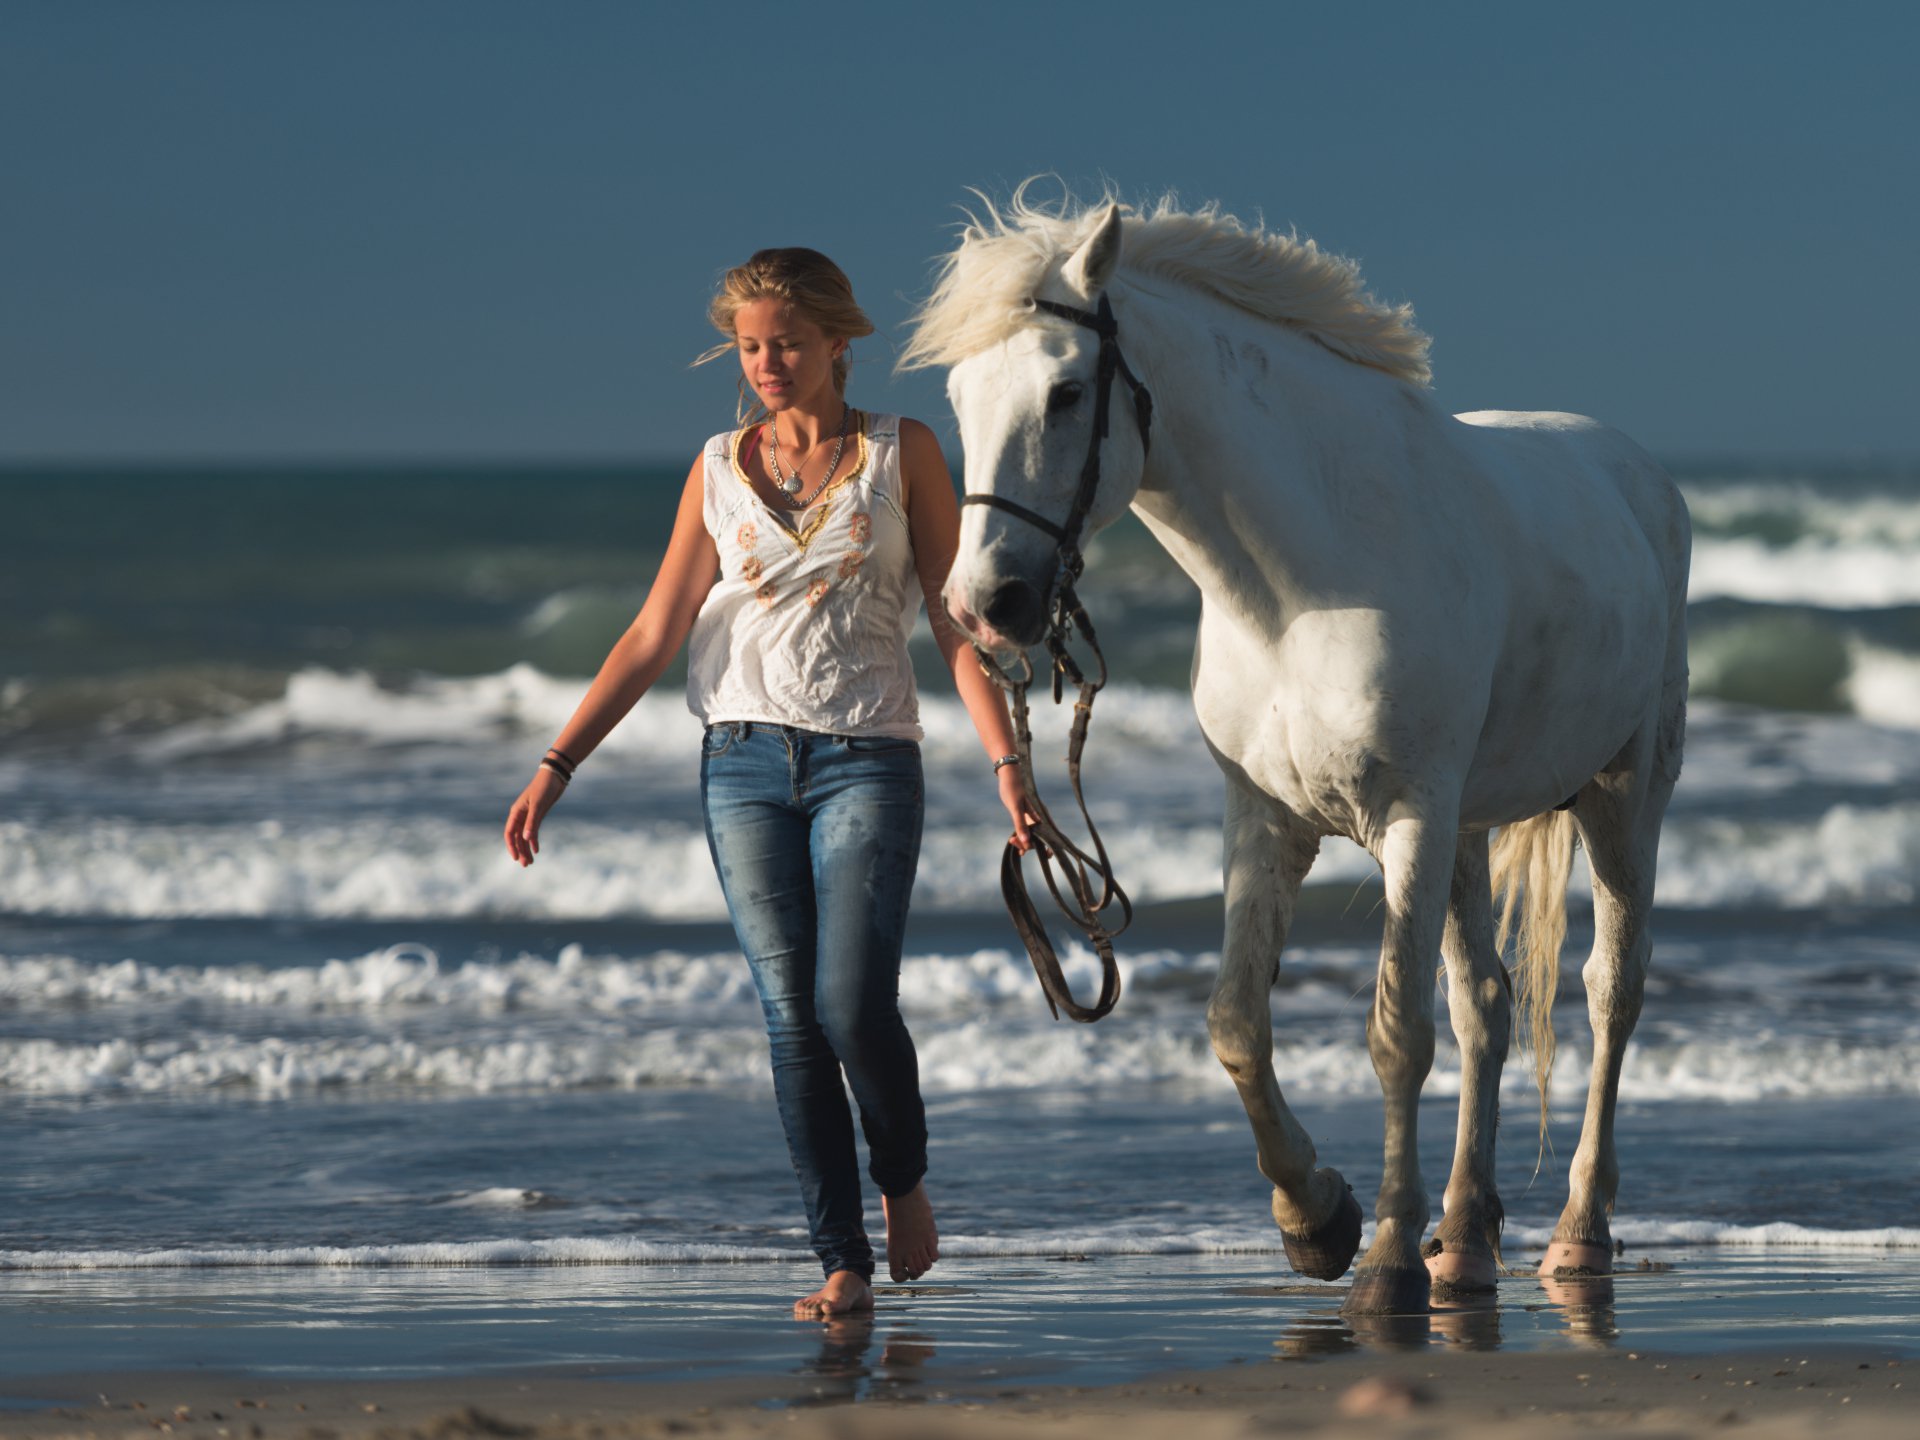 Лошадку ведет. Девушка с лошадью. Лошади и море. Девочка на лошади.